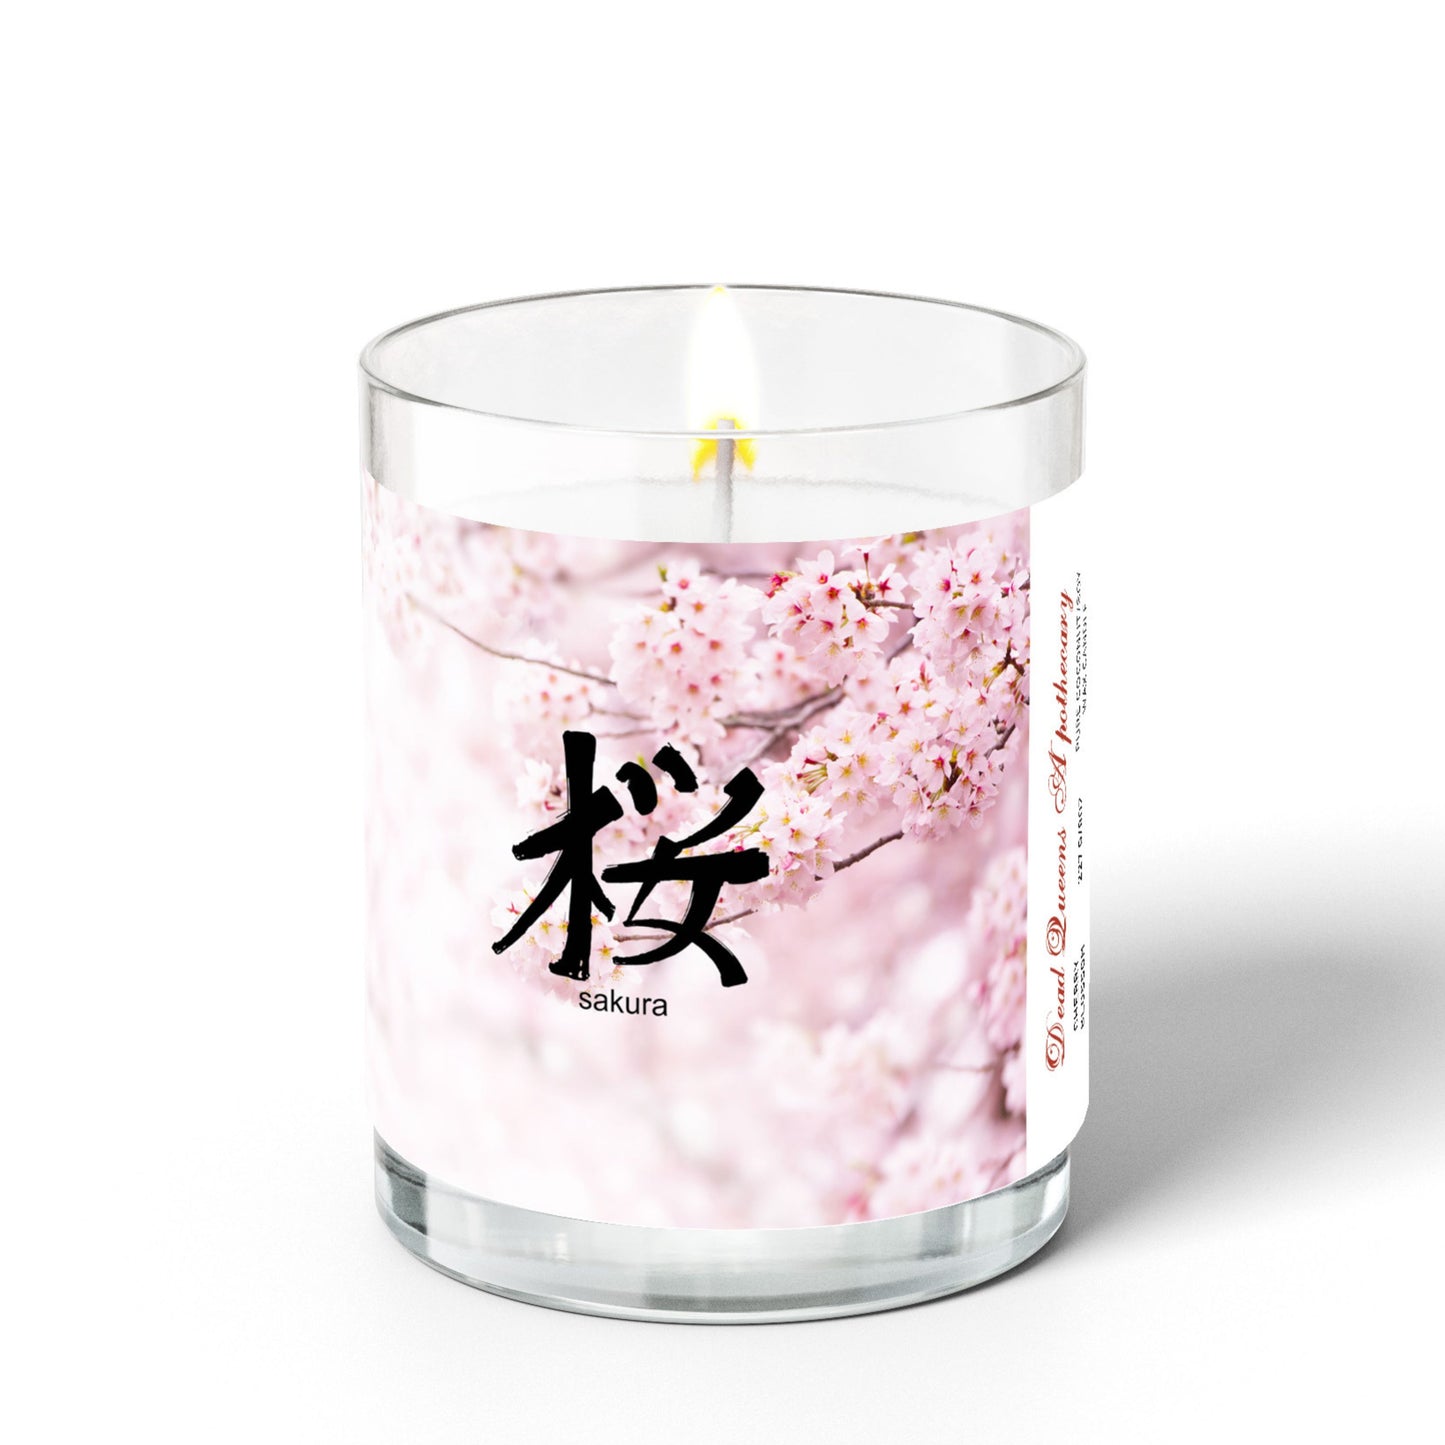 Sakura-Cherry Blossom Candle  - Lit